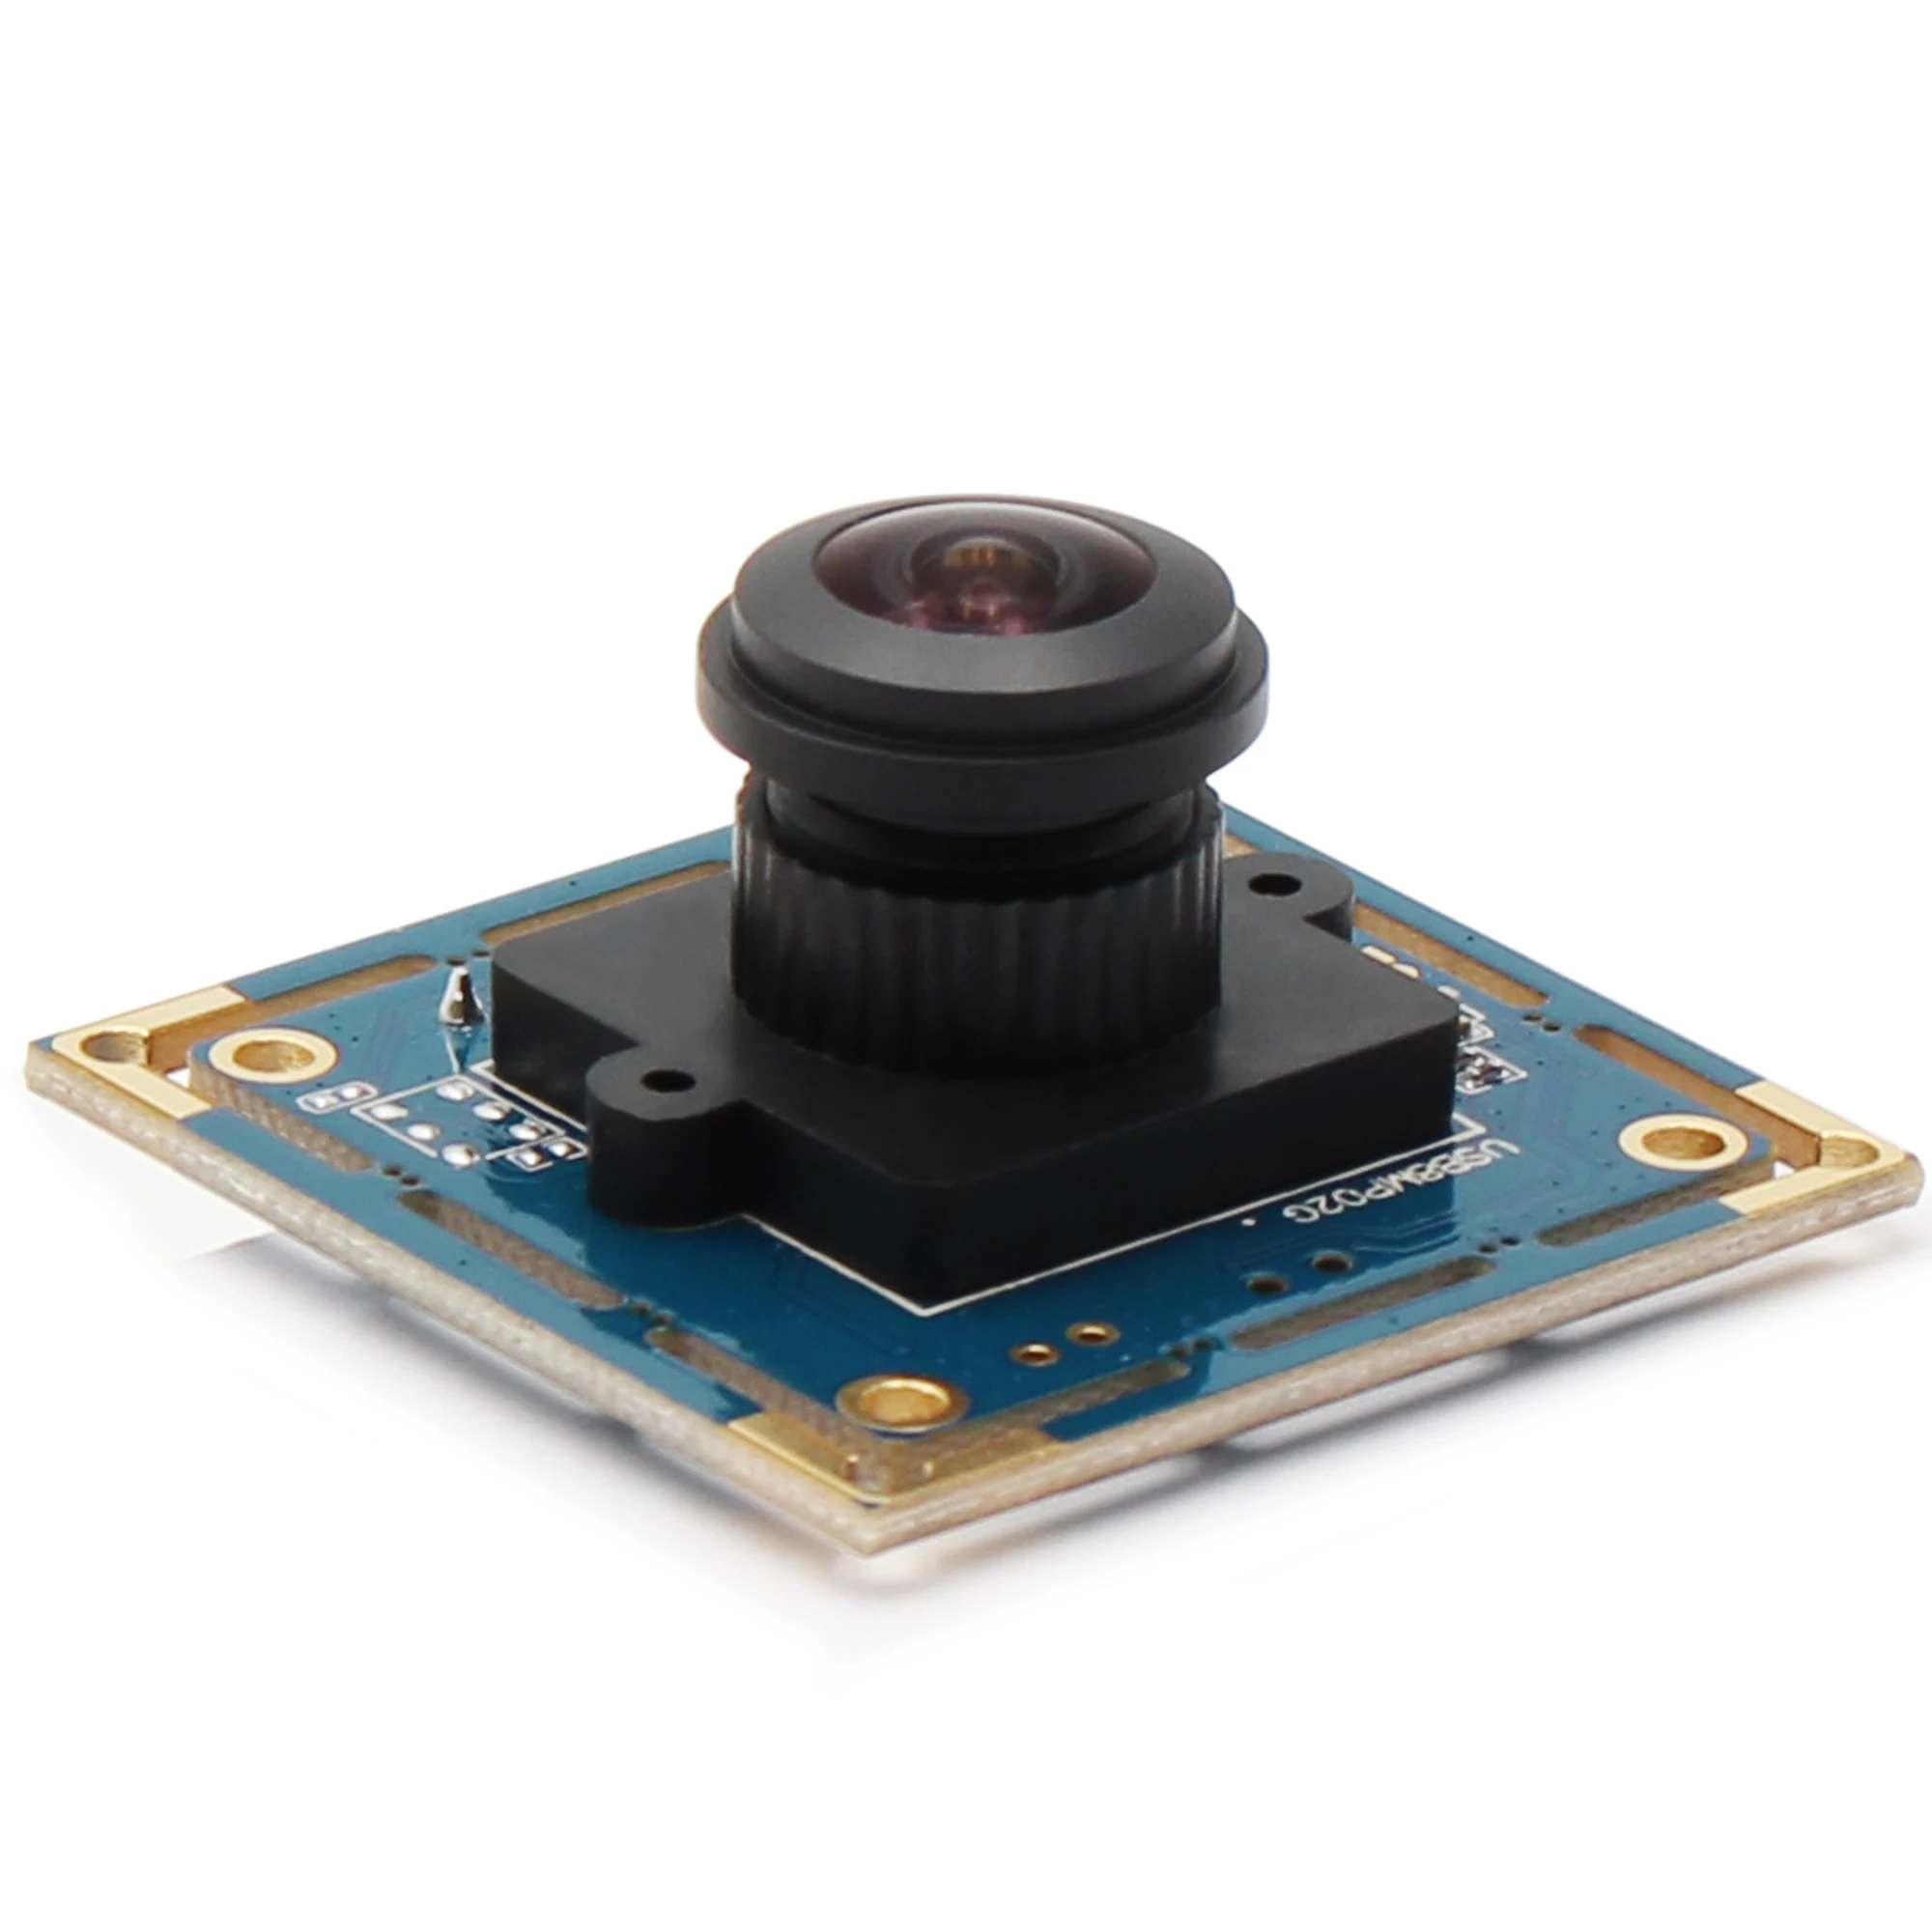 Modul kamere ELP visoke rezolucije 8 megapiksela web kamera USB širokokutni objektiv 